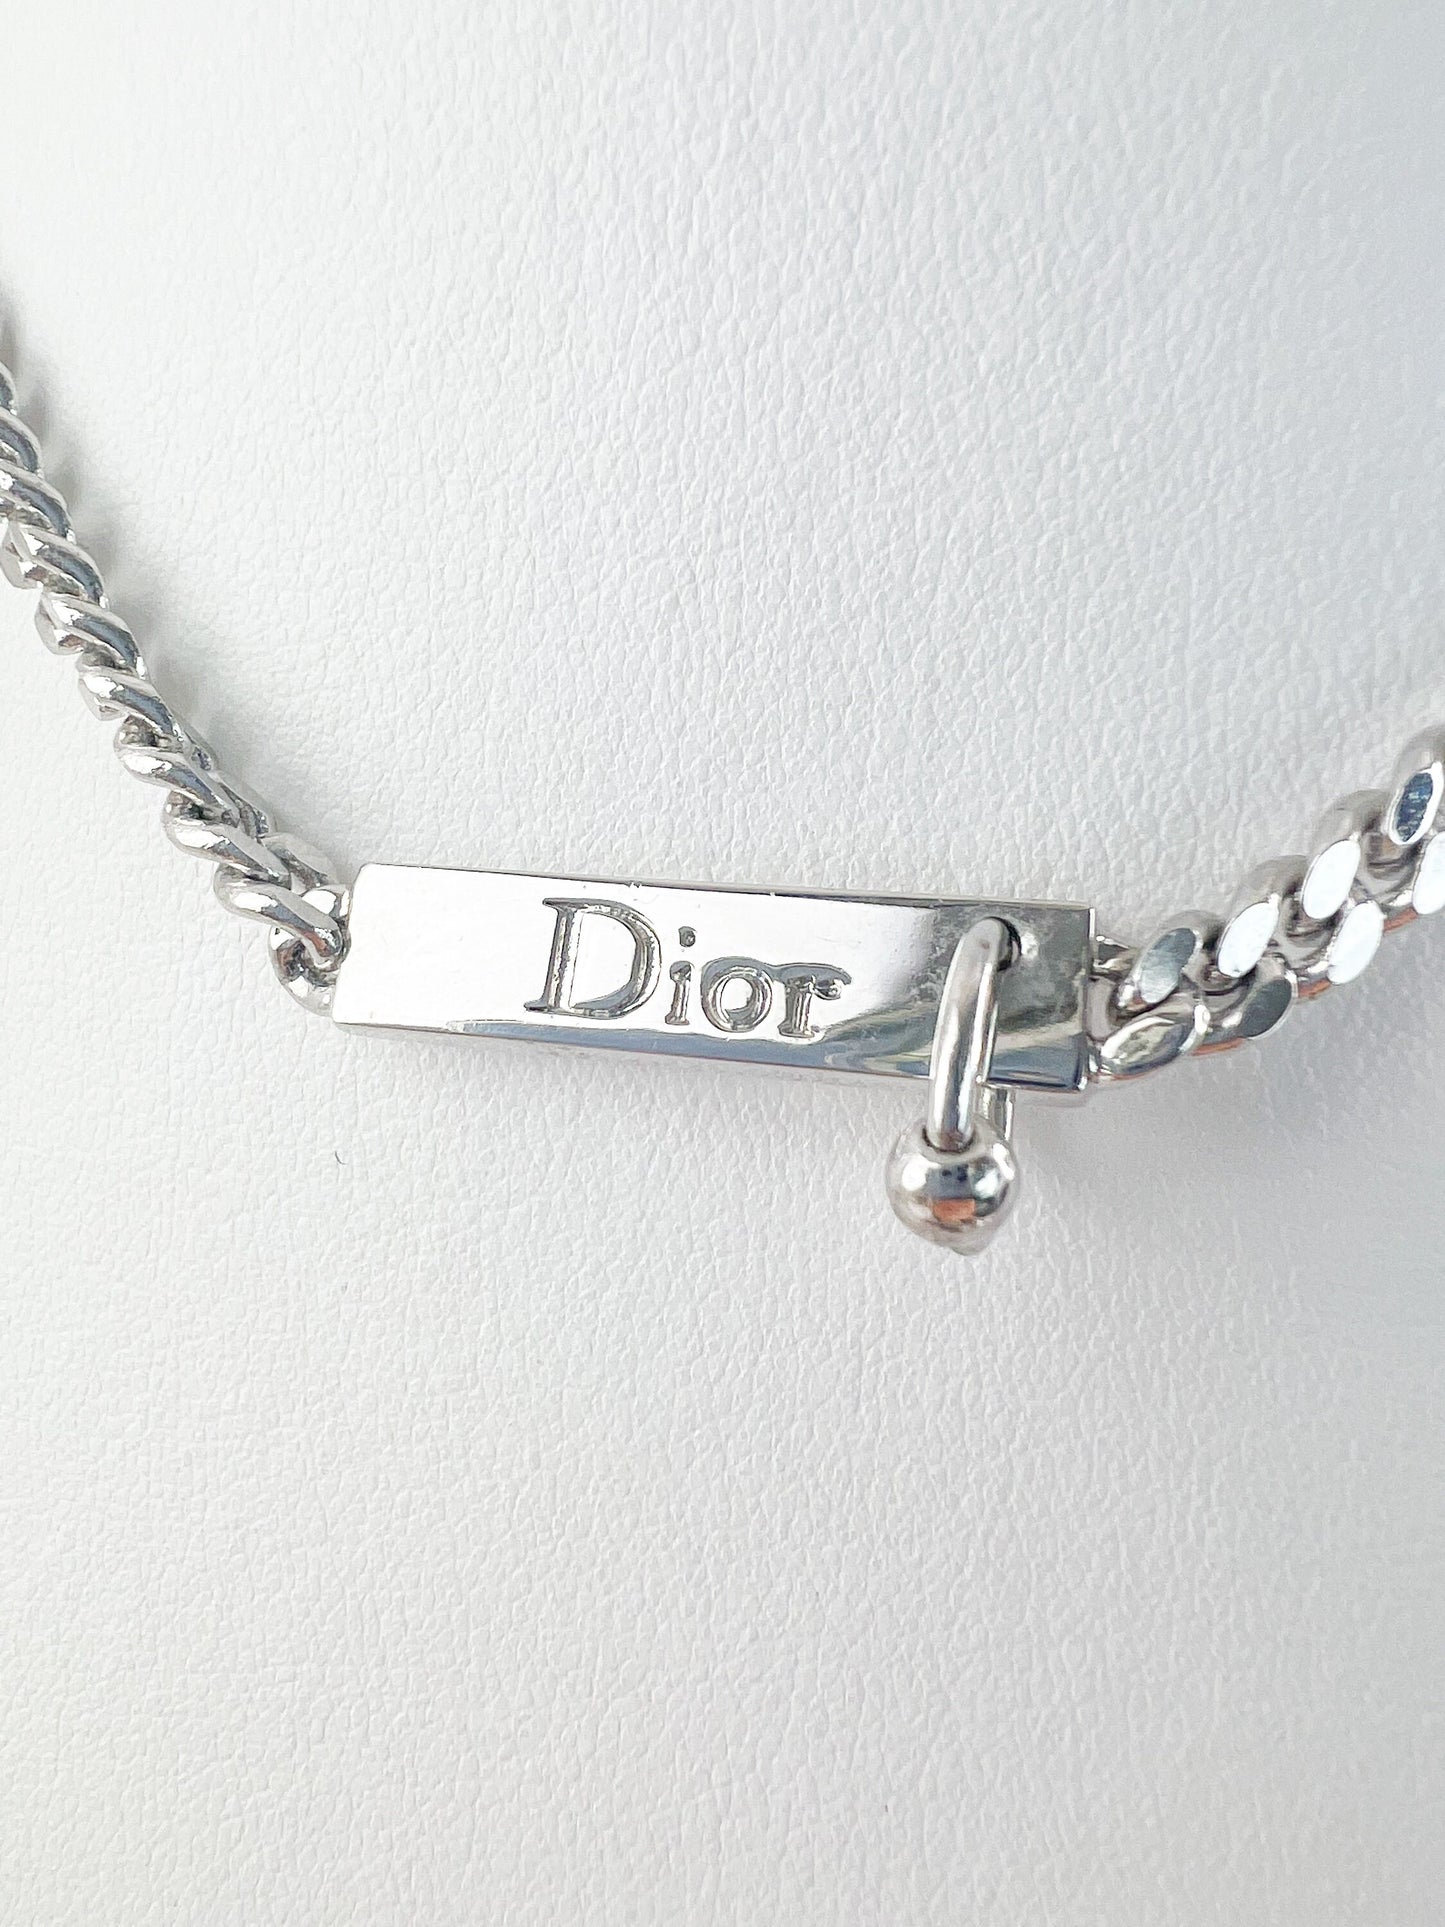 Vintage Christian Dior Necklace, Bridal Necklace, Vintage Necklace, Personalised Gifts, Choker Necklace Gold, CD Logo, Vintage Rhinestone